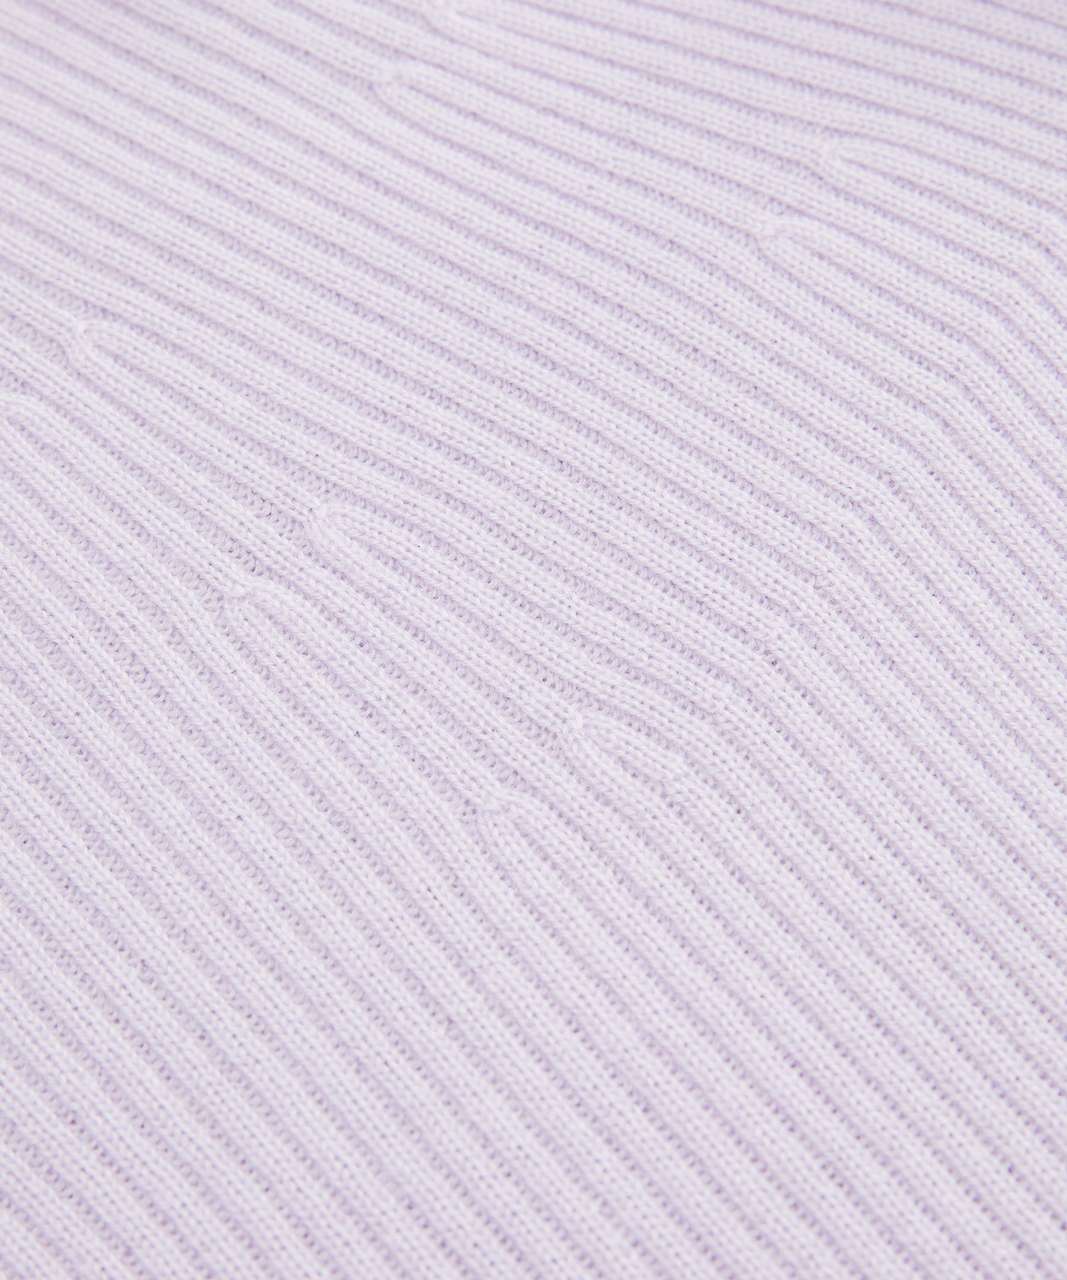 Lululemon Merino Wool Long Sleeve Light Sweater - Faint Lavender